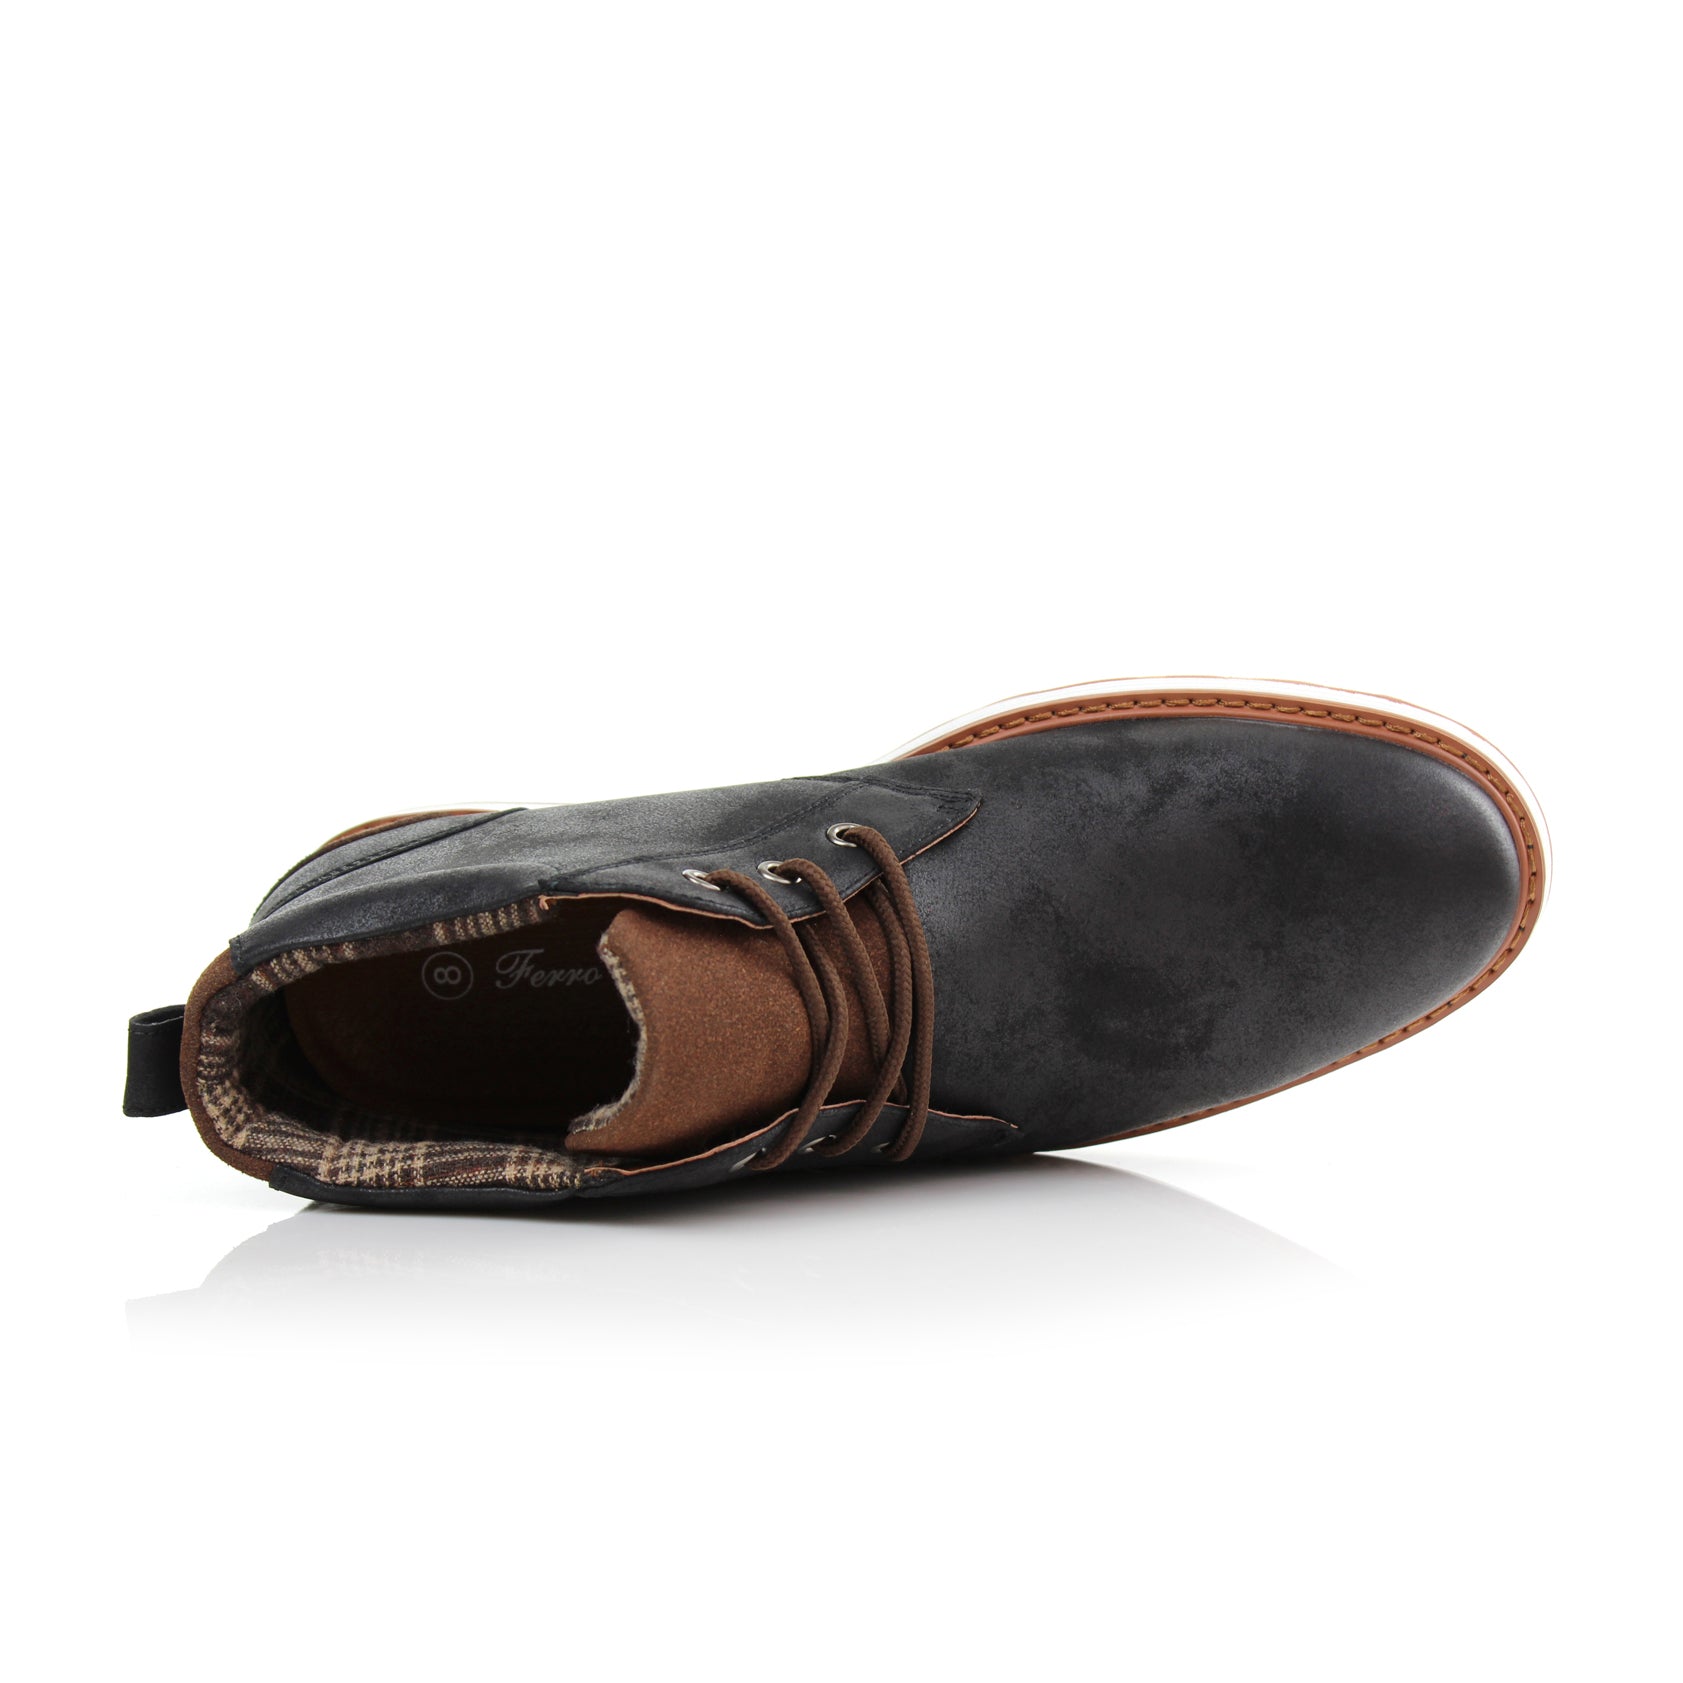 Sneaker Chukka Boots | Houstan by Ferro Aldo | Conal Footwear | Top-Down Angle View